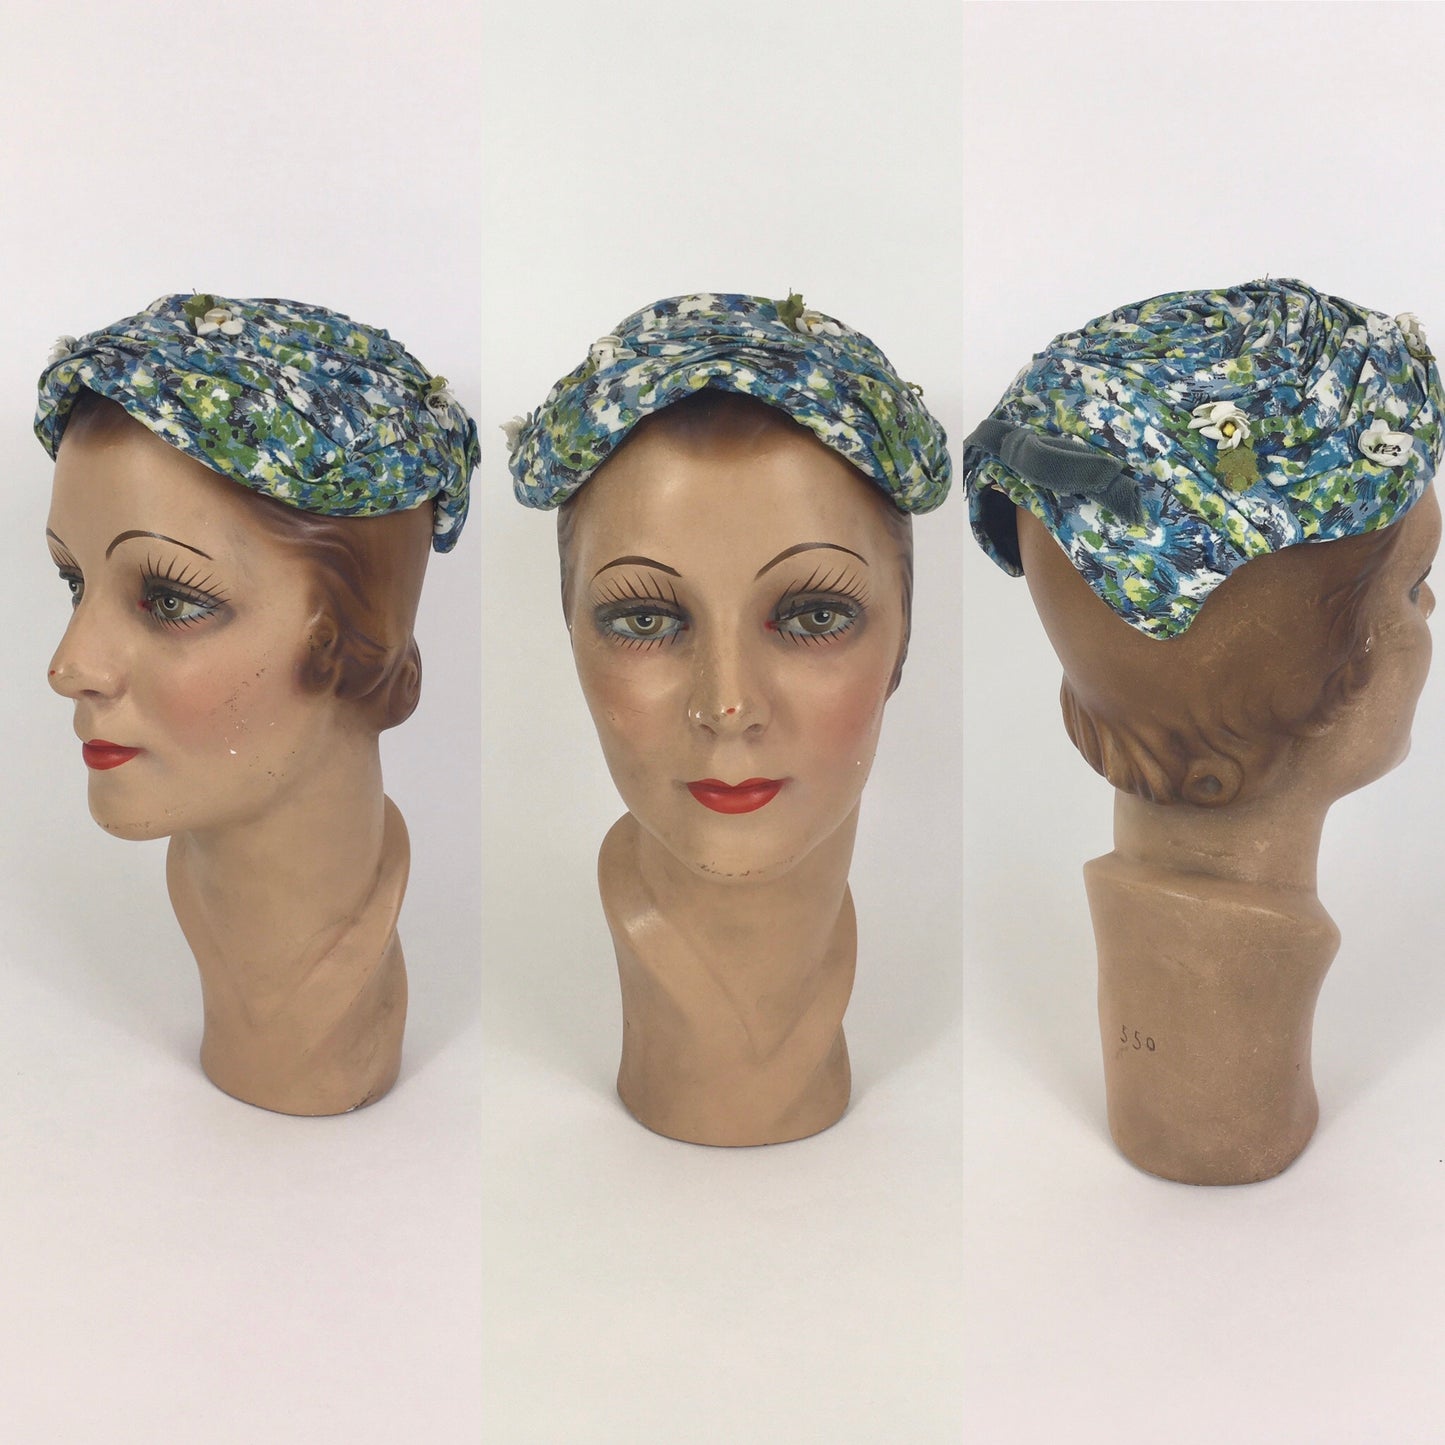 Original 1950’s Darling Floral Headpiece With Flora & Velvet Trim - In Blues, Greens & Ivory